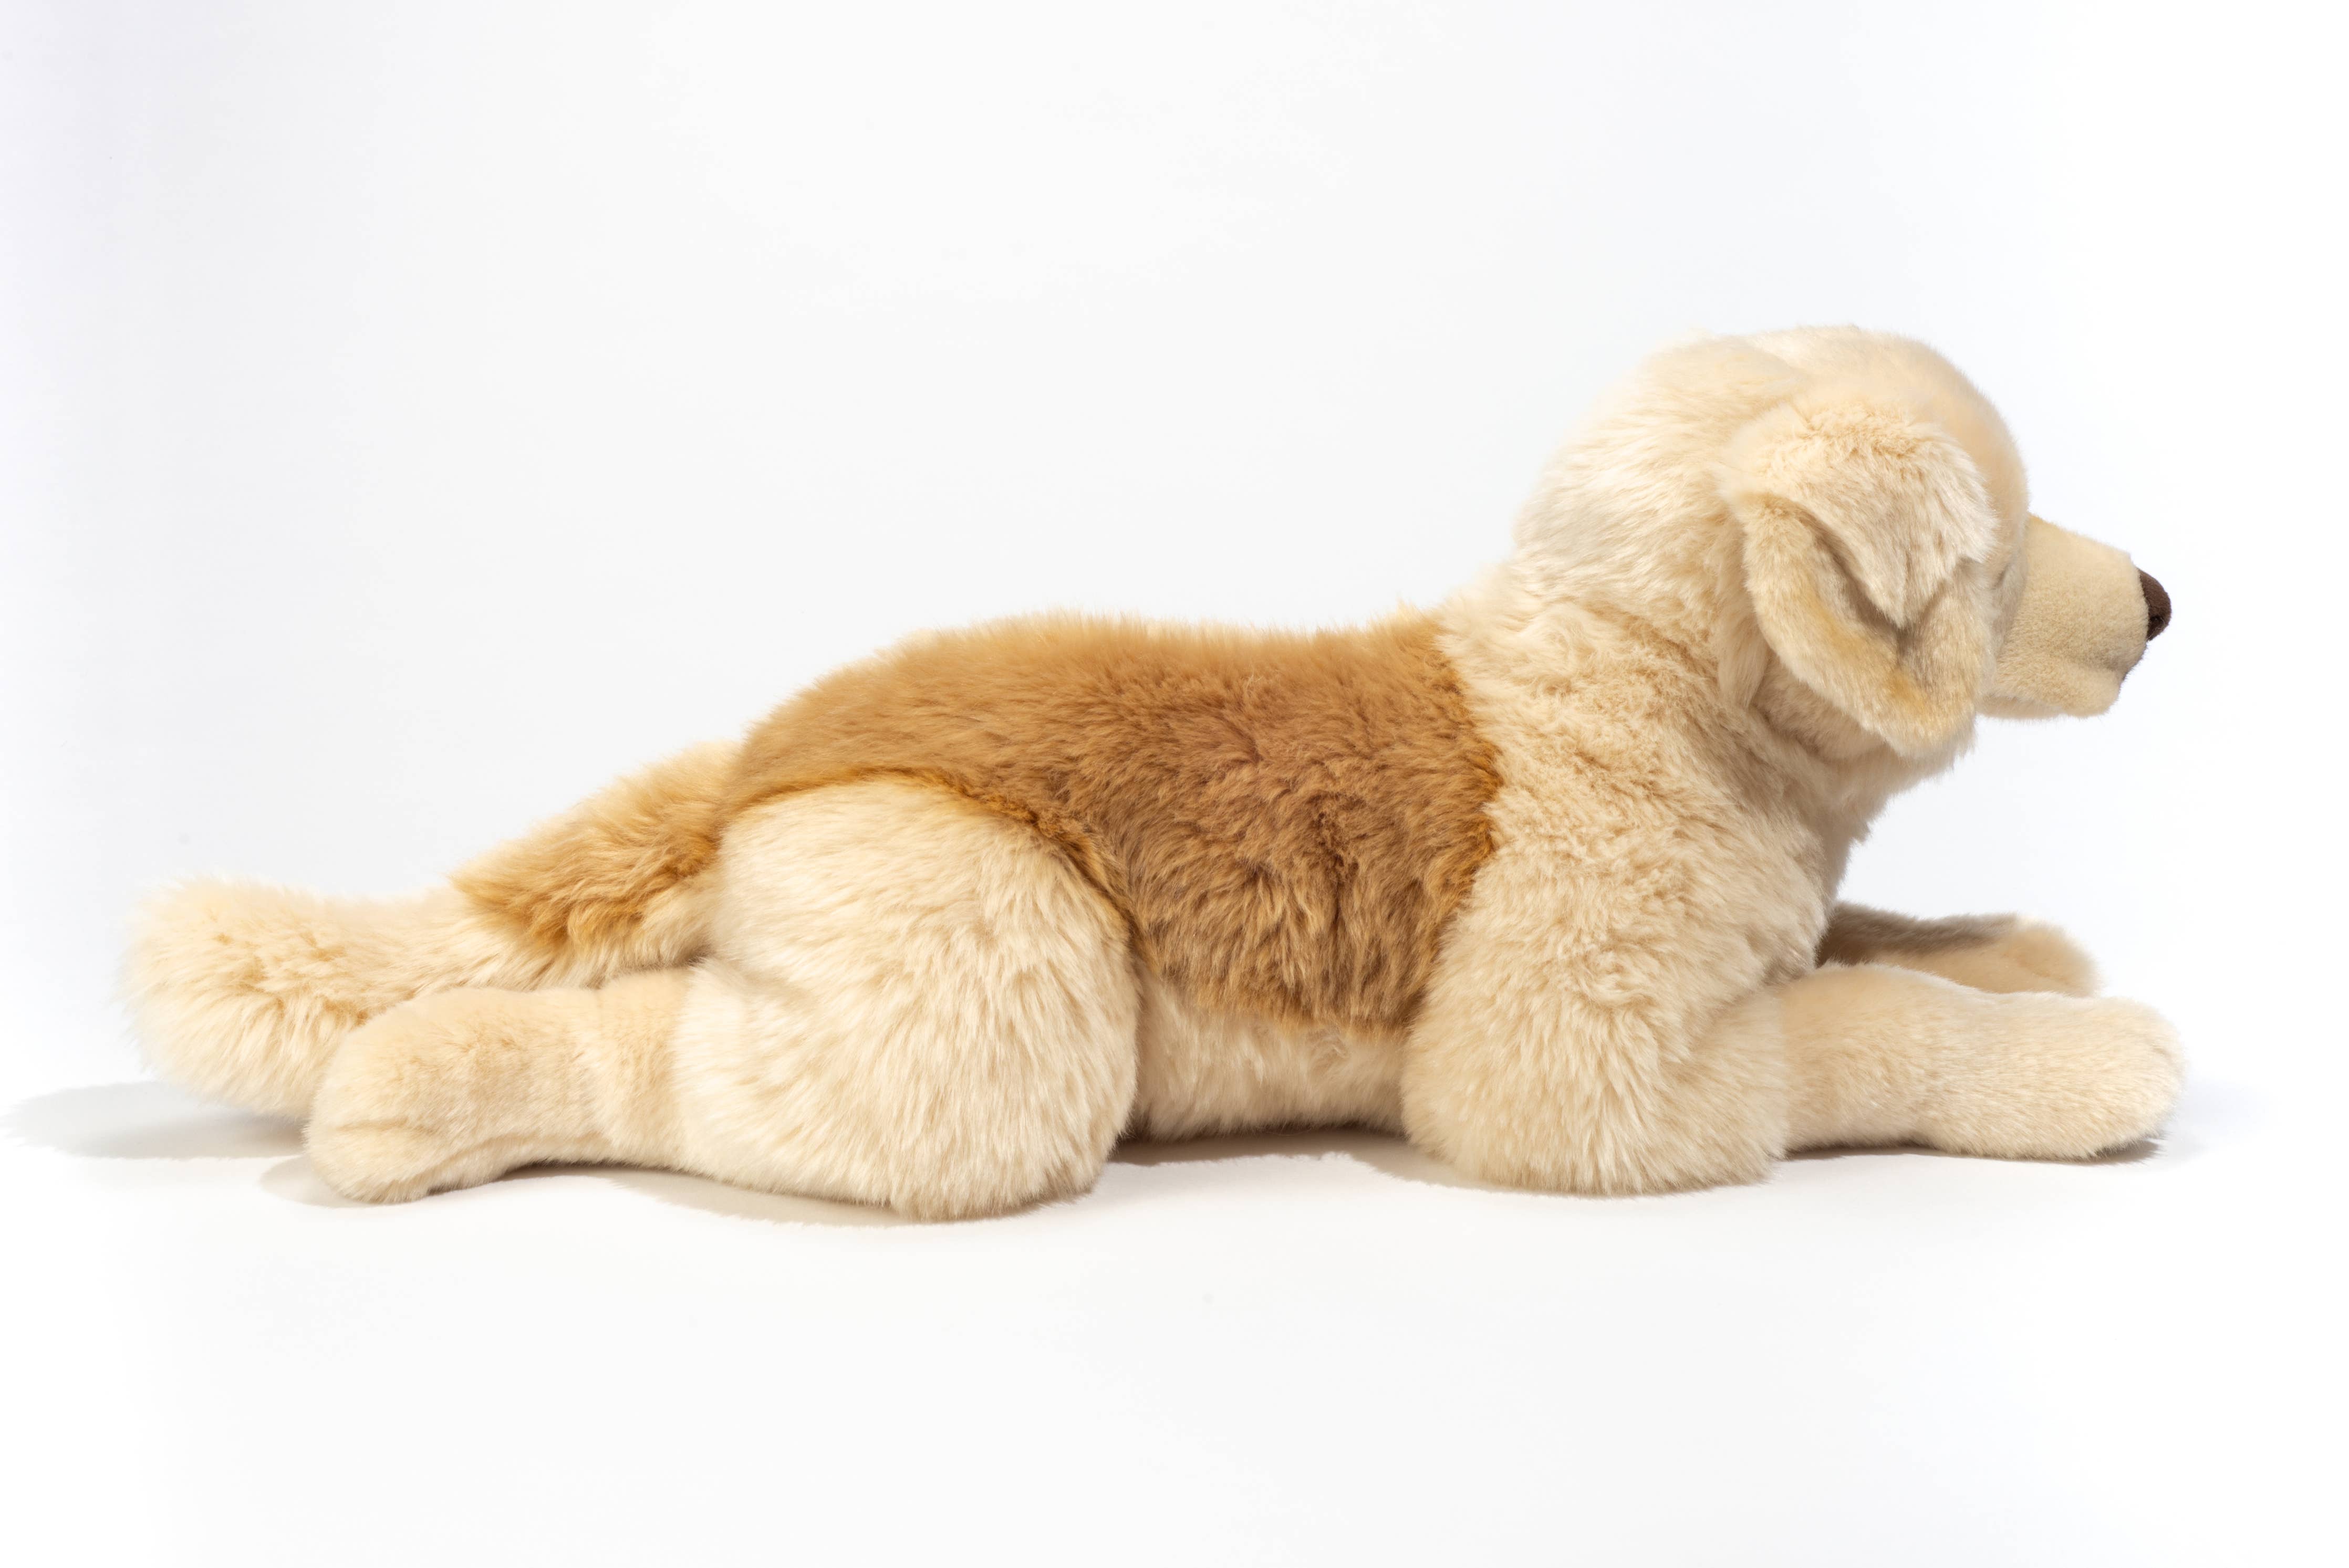 Beautiful Realistic Golden Retriever Floppy Plush Dog 60 cm by Teddy Hermann